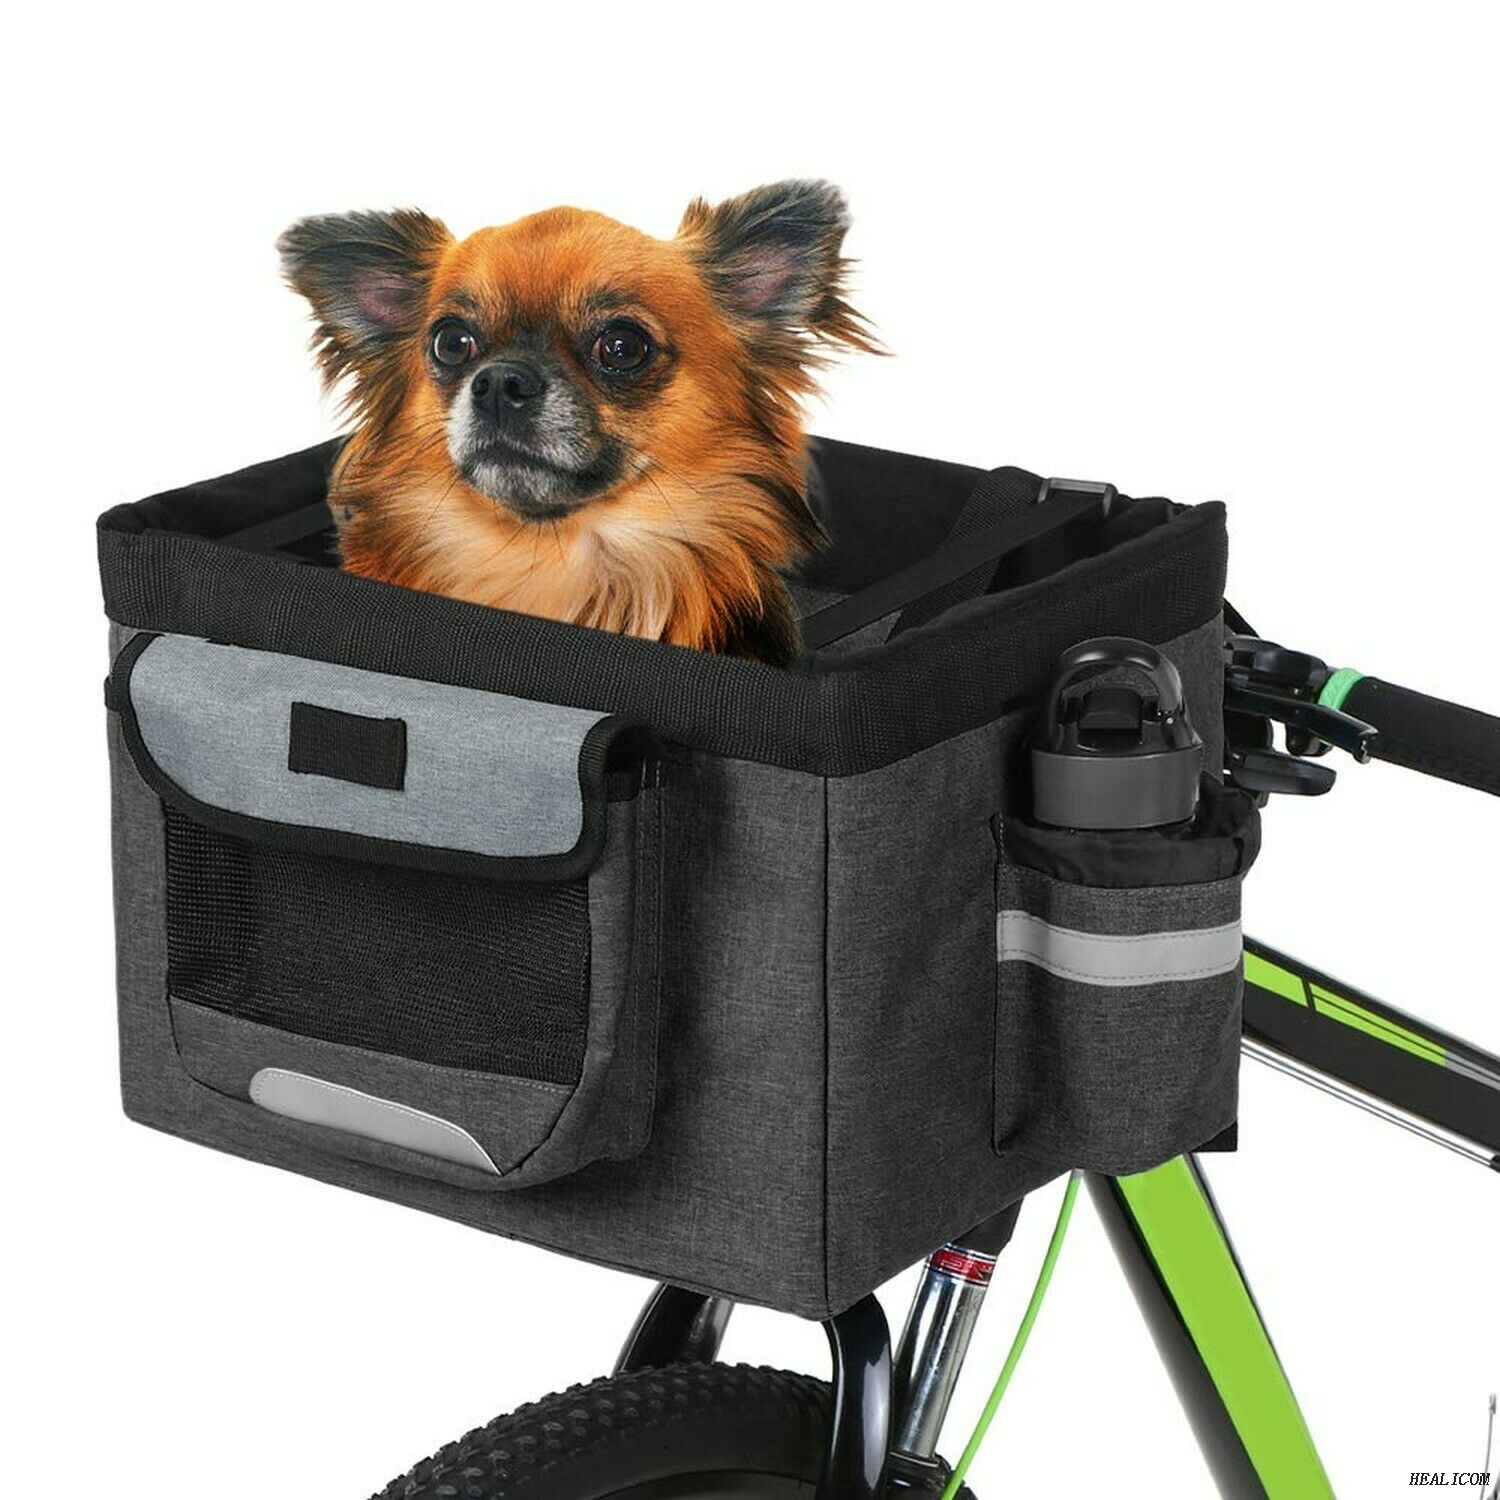 TPC0021 Cestas para bicicletas para mascotas Portador de bolsas para perros y gatos pequeños para mascotas